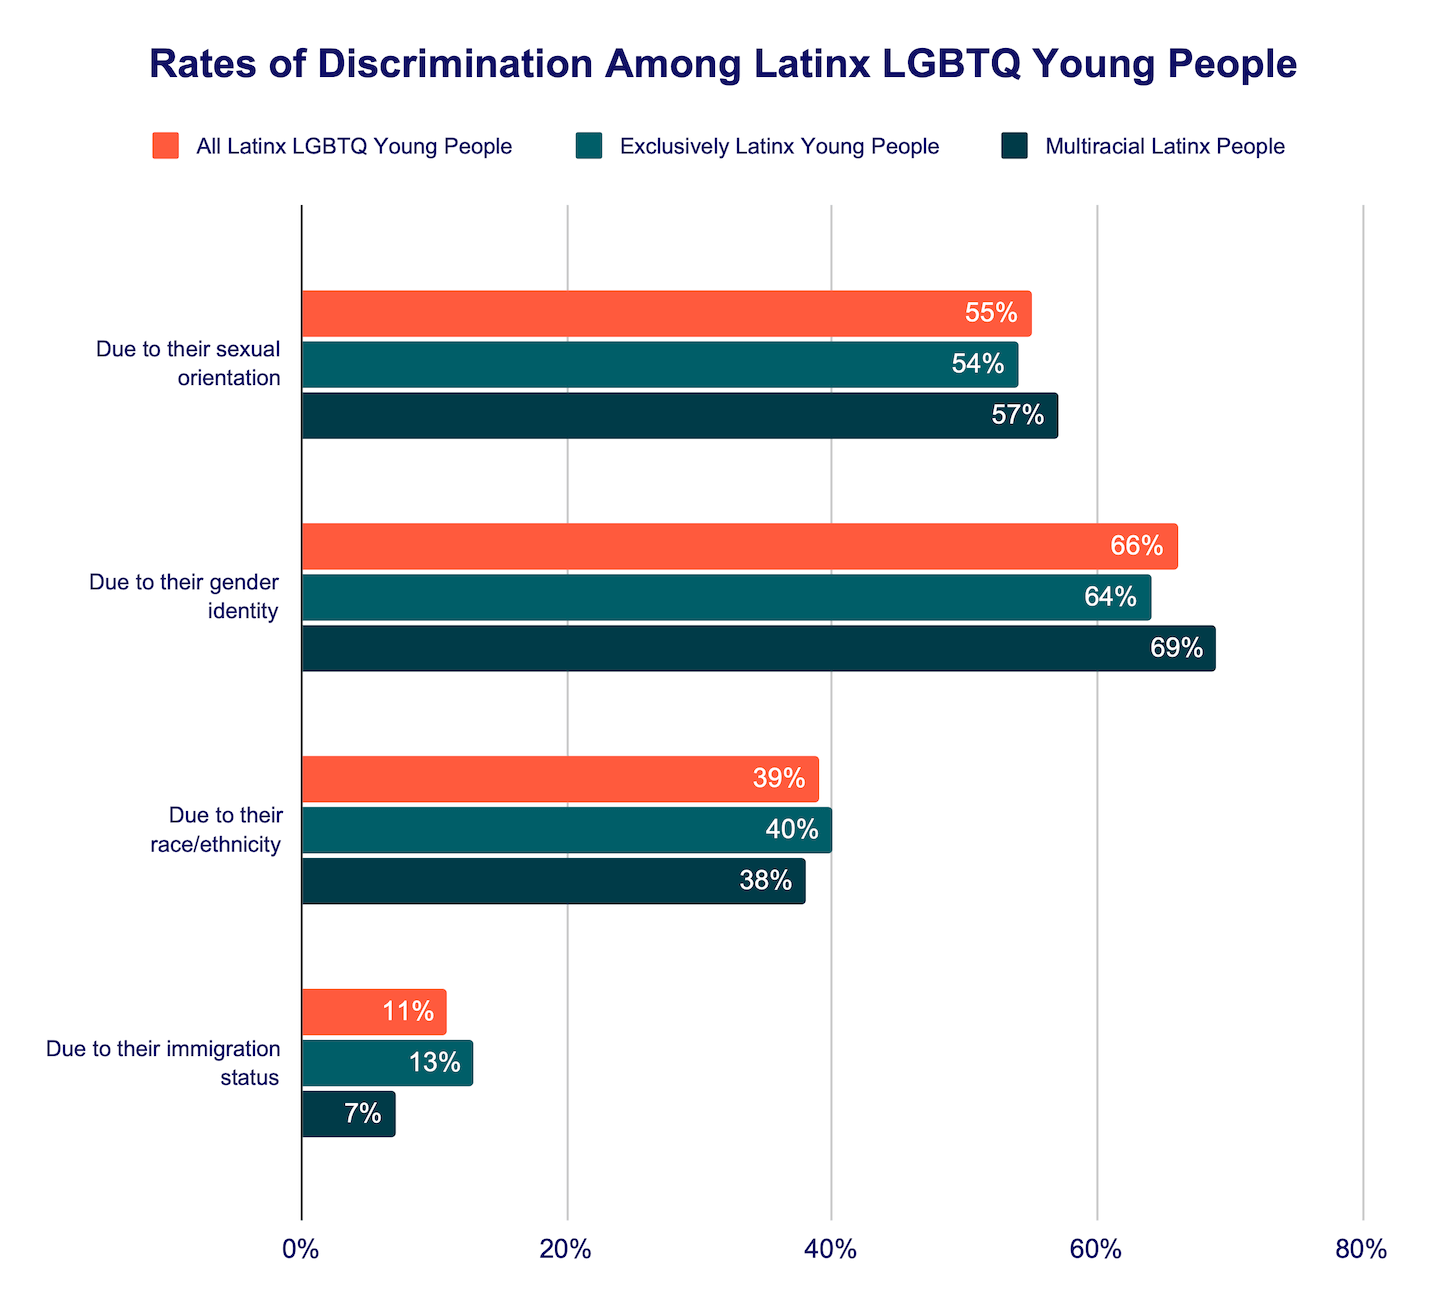 Rates of discrimination among Latinx LGBTQ young people bar graph